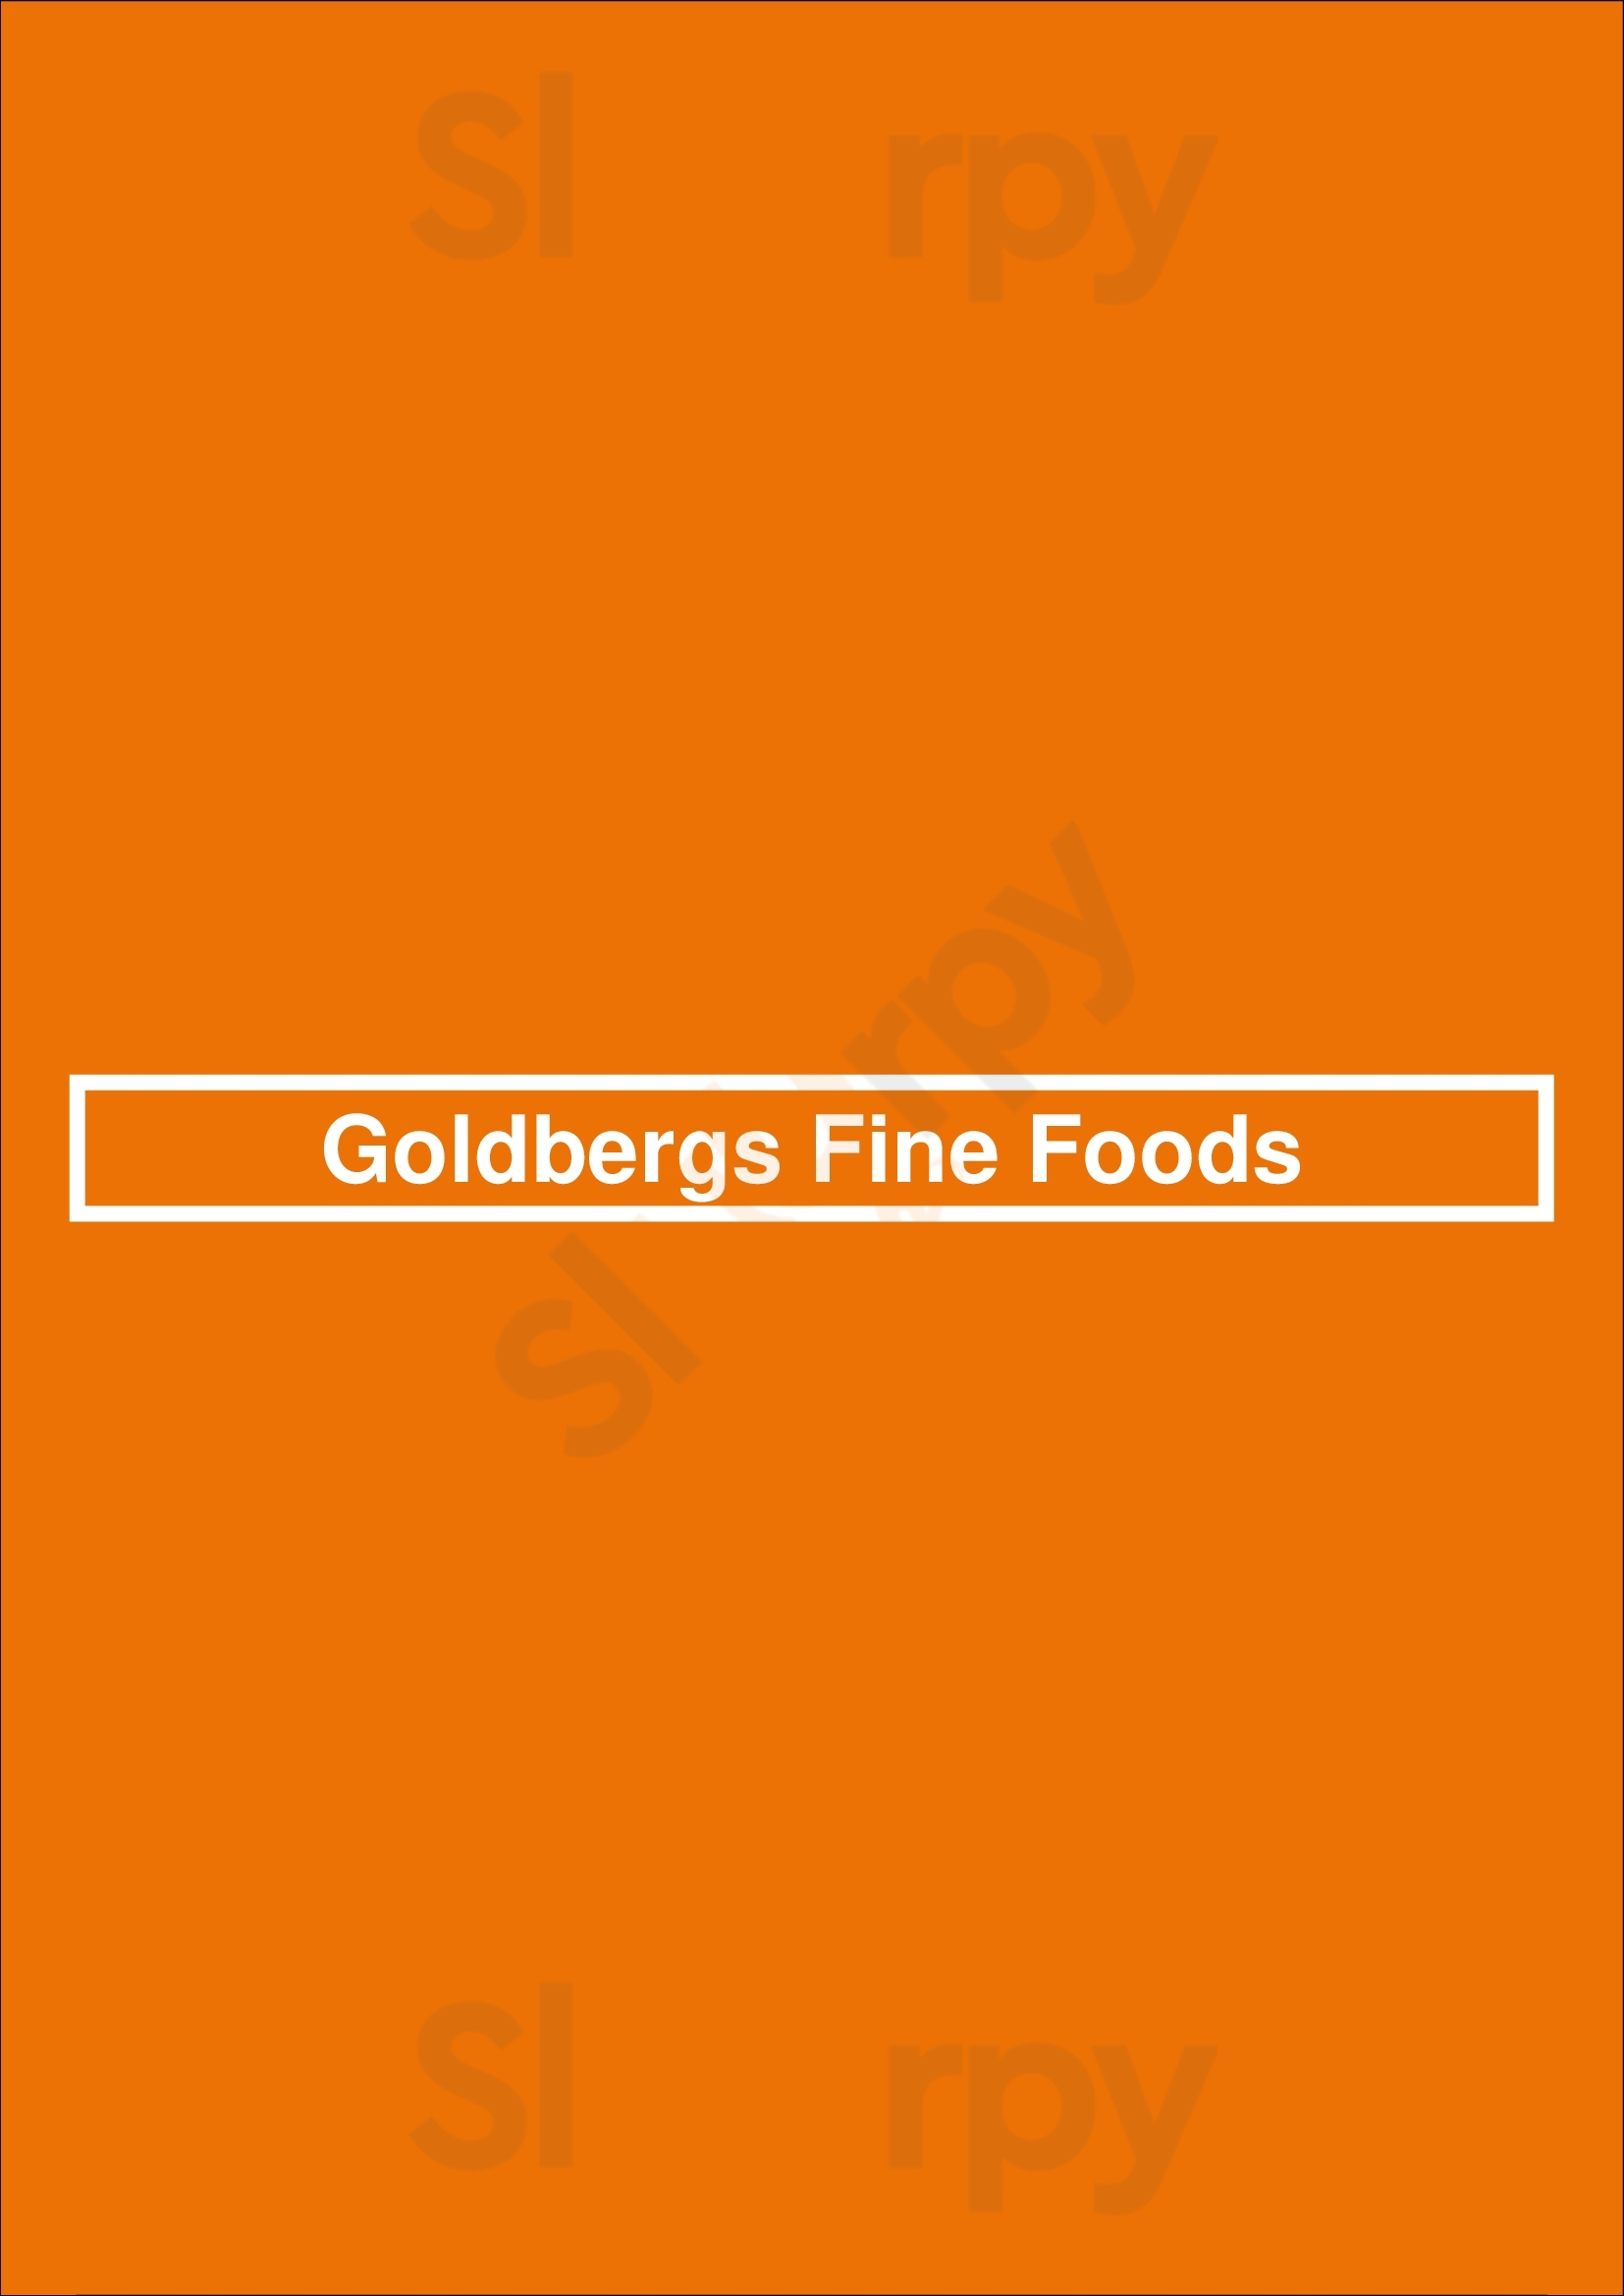 Goldbergs Fine Foods Marietta Menu - 1